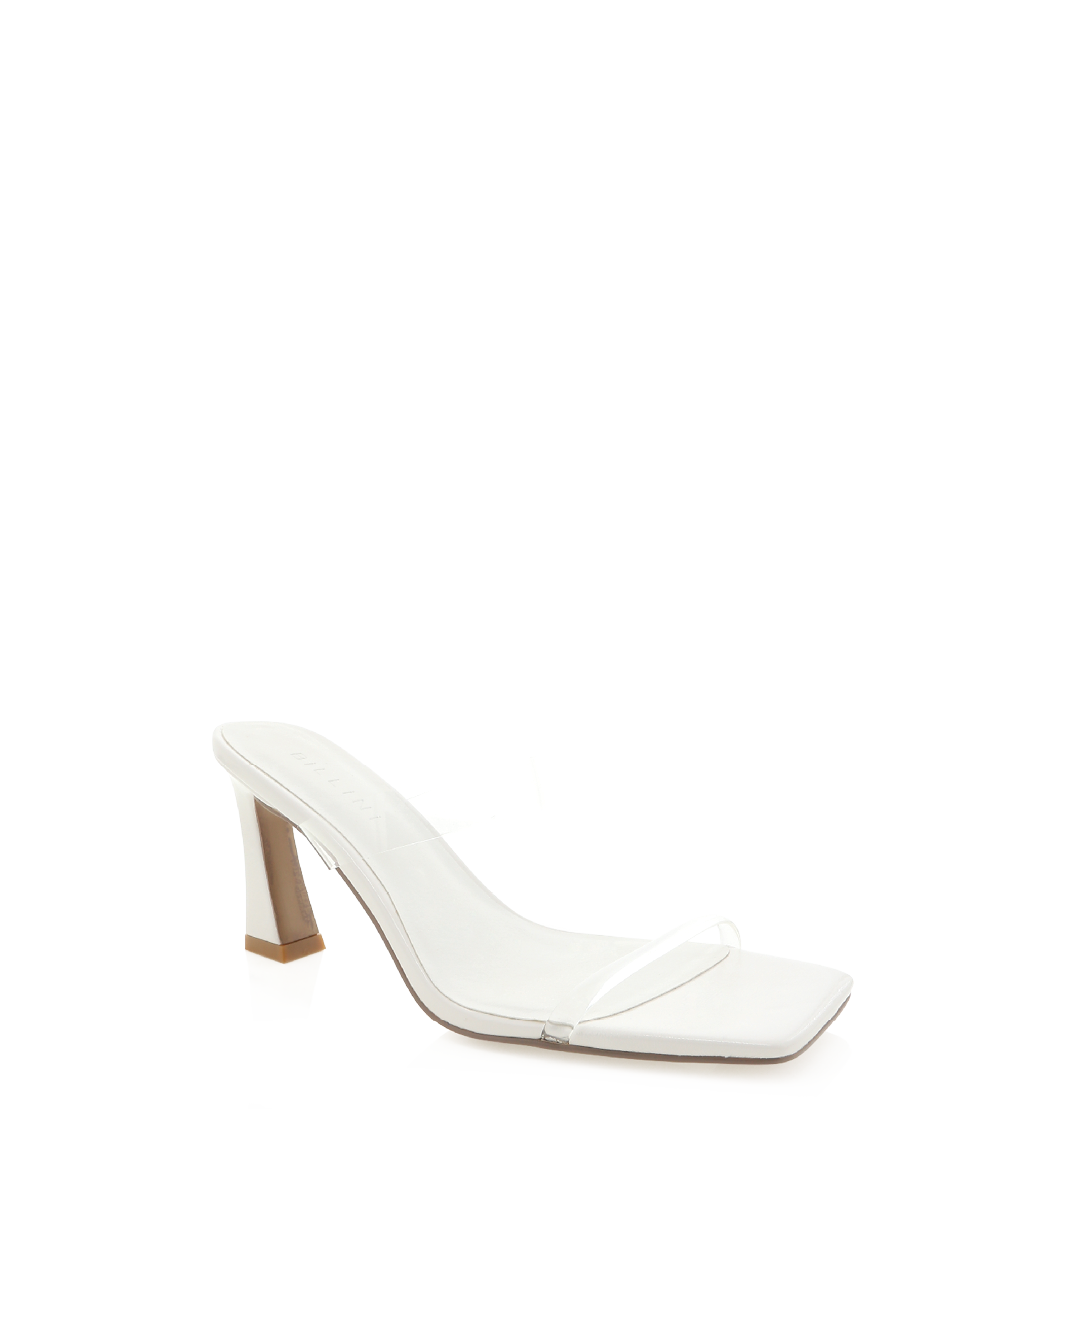 MIKANA - WHITE PATENT-CLEAR-Heels-Billini-Billini